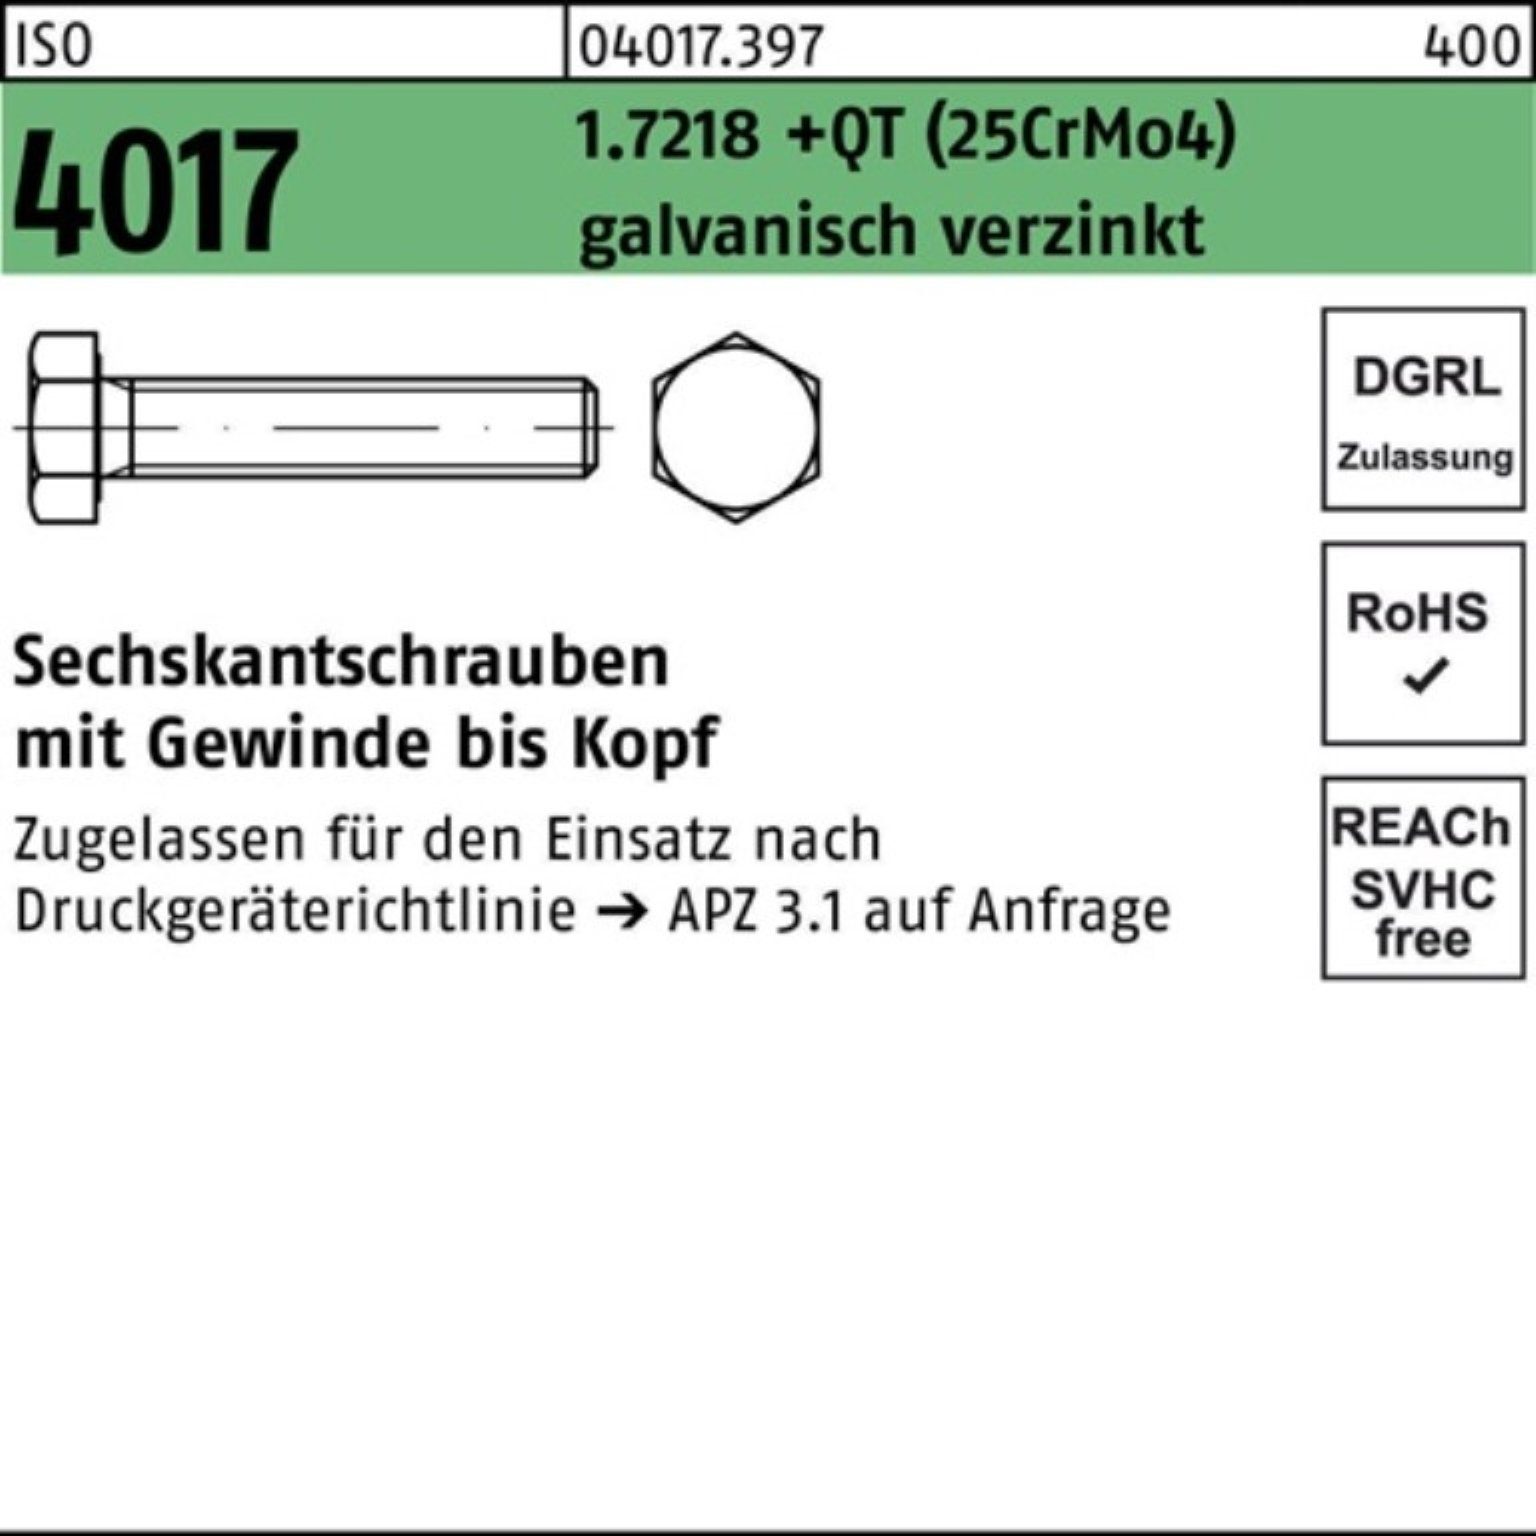 Sechskantschraube (25CrMo4) ISO Bufab M16x100 100er 4017 Pack +QT VG 1.7218 Sechskantschraube